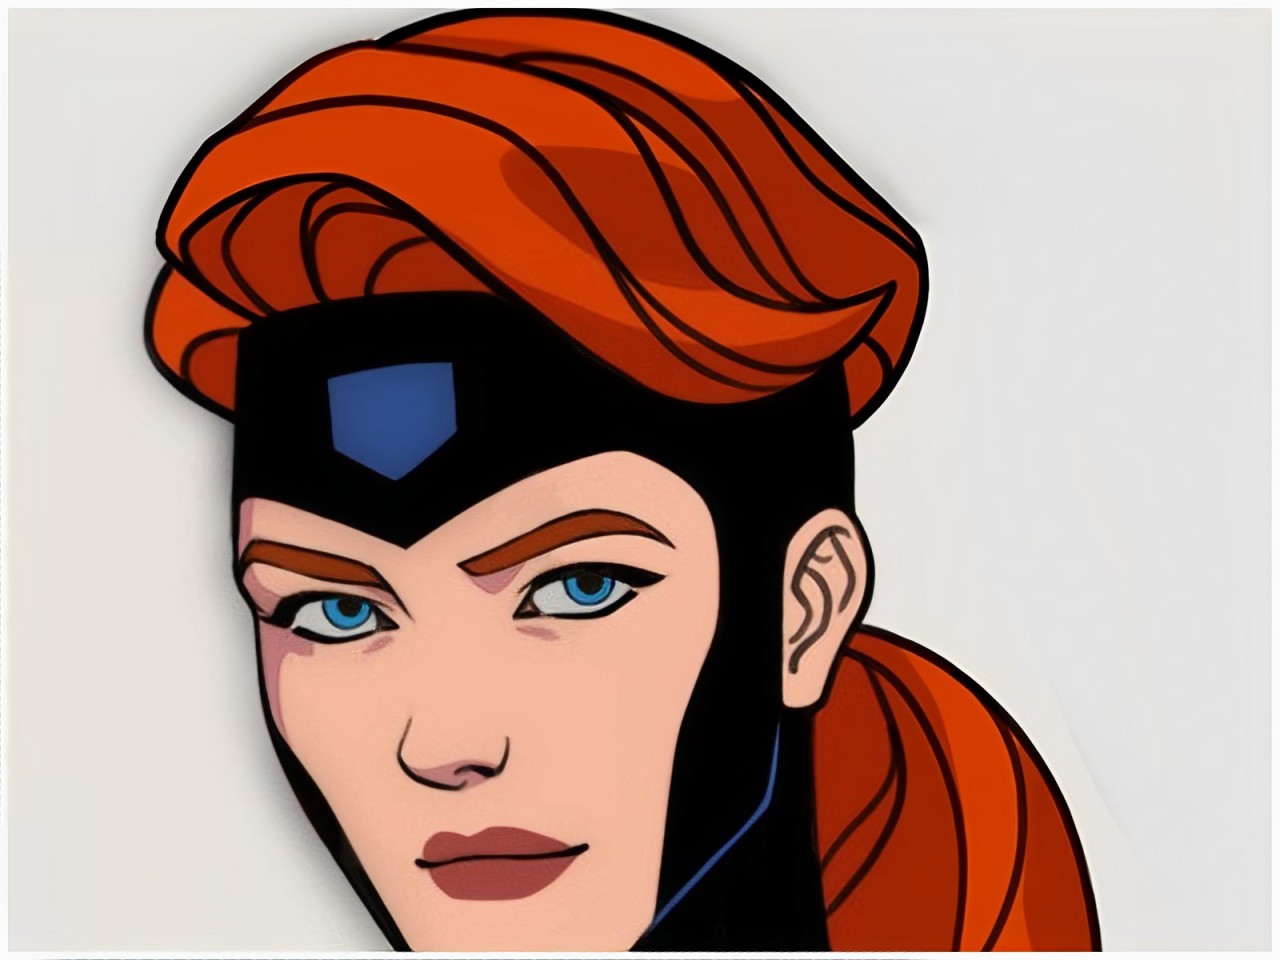 Jean Grey from X-Men